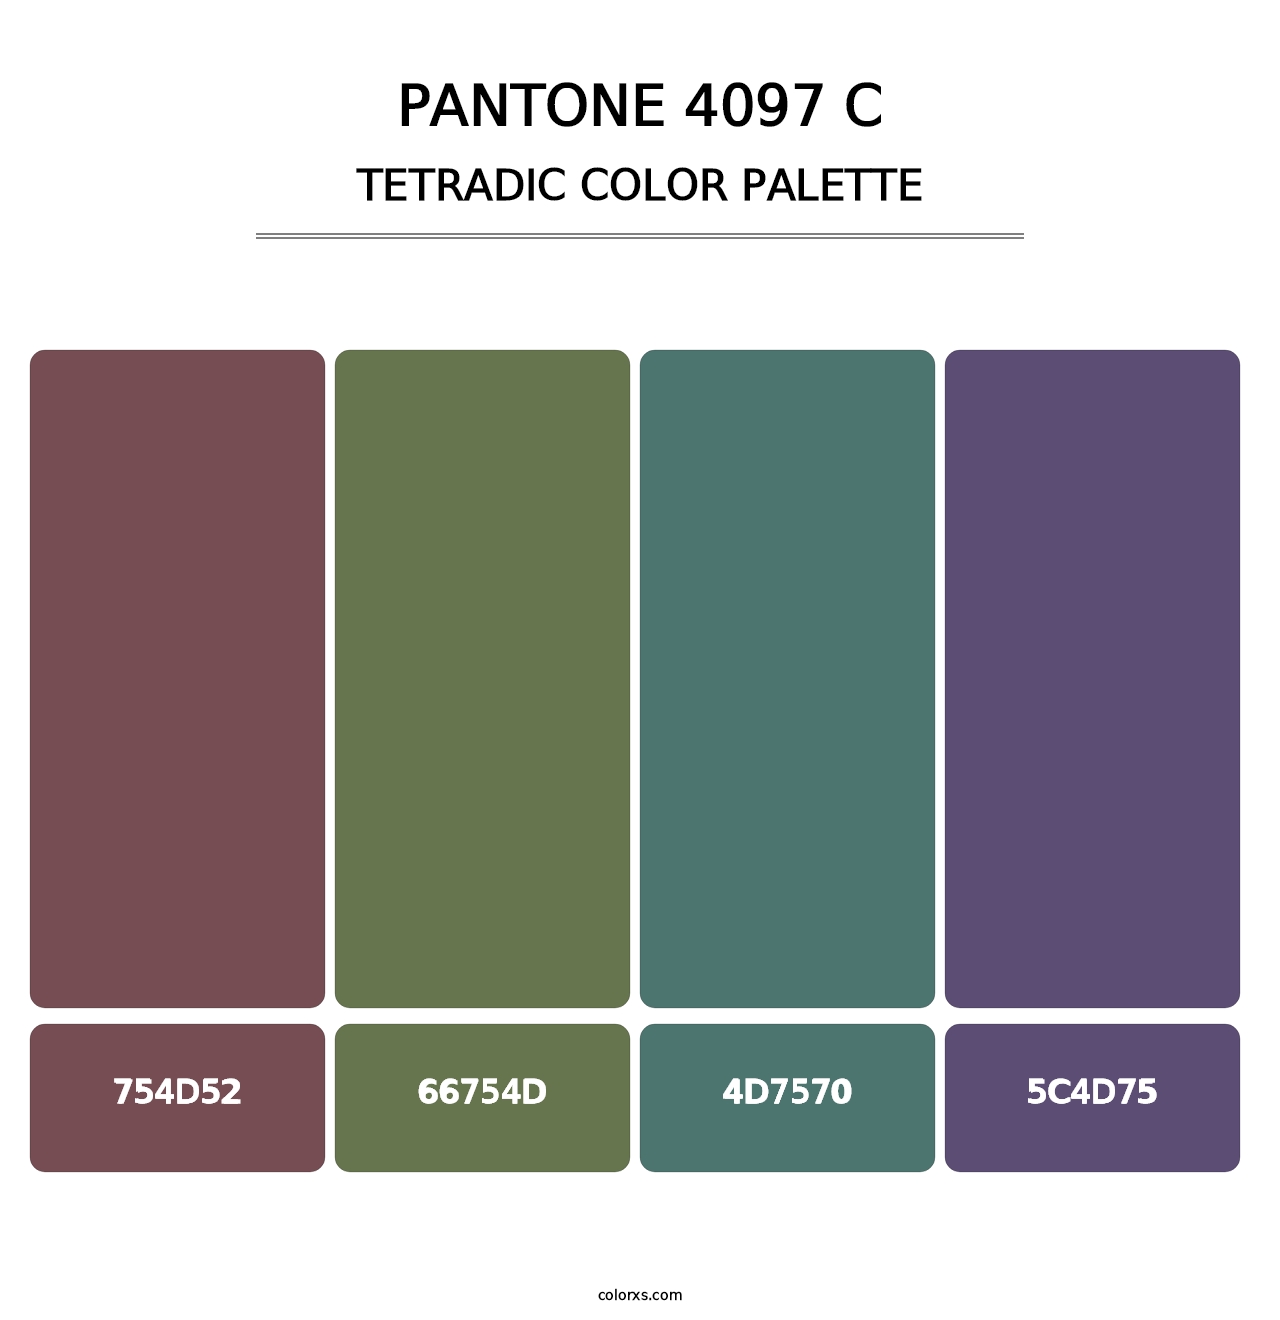 PANTONE 4097 C - Tetradic Color Palette